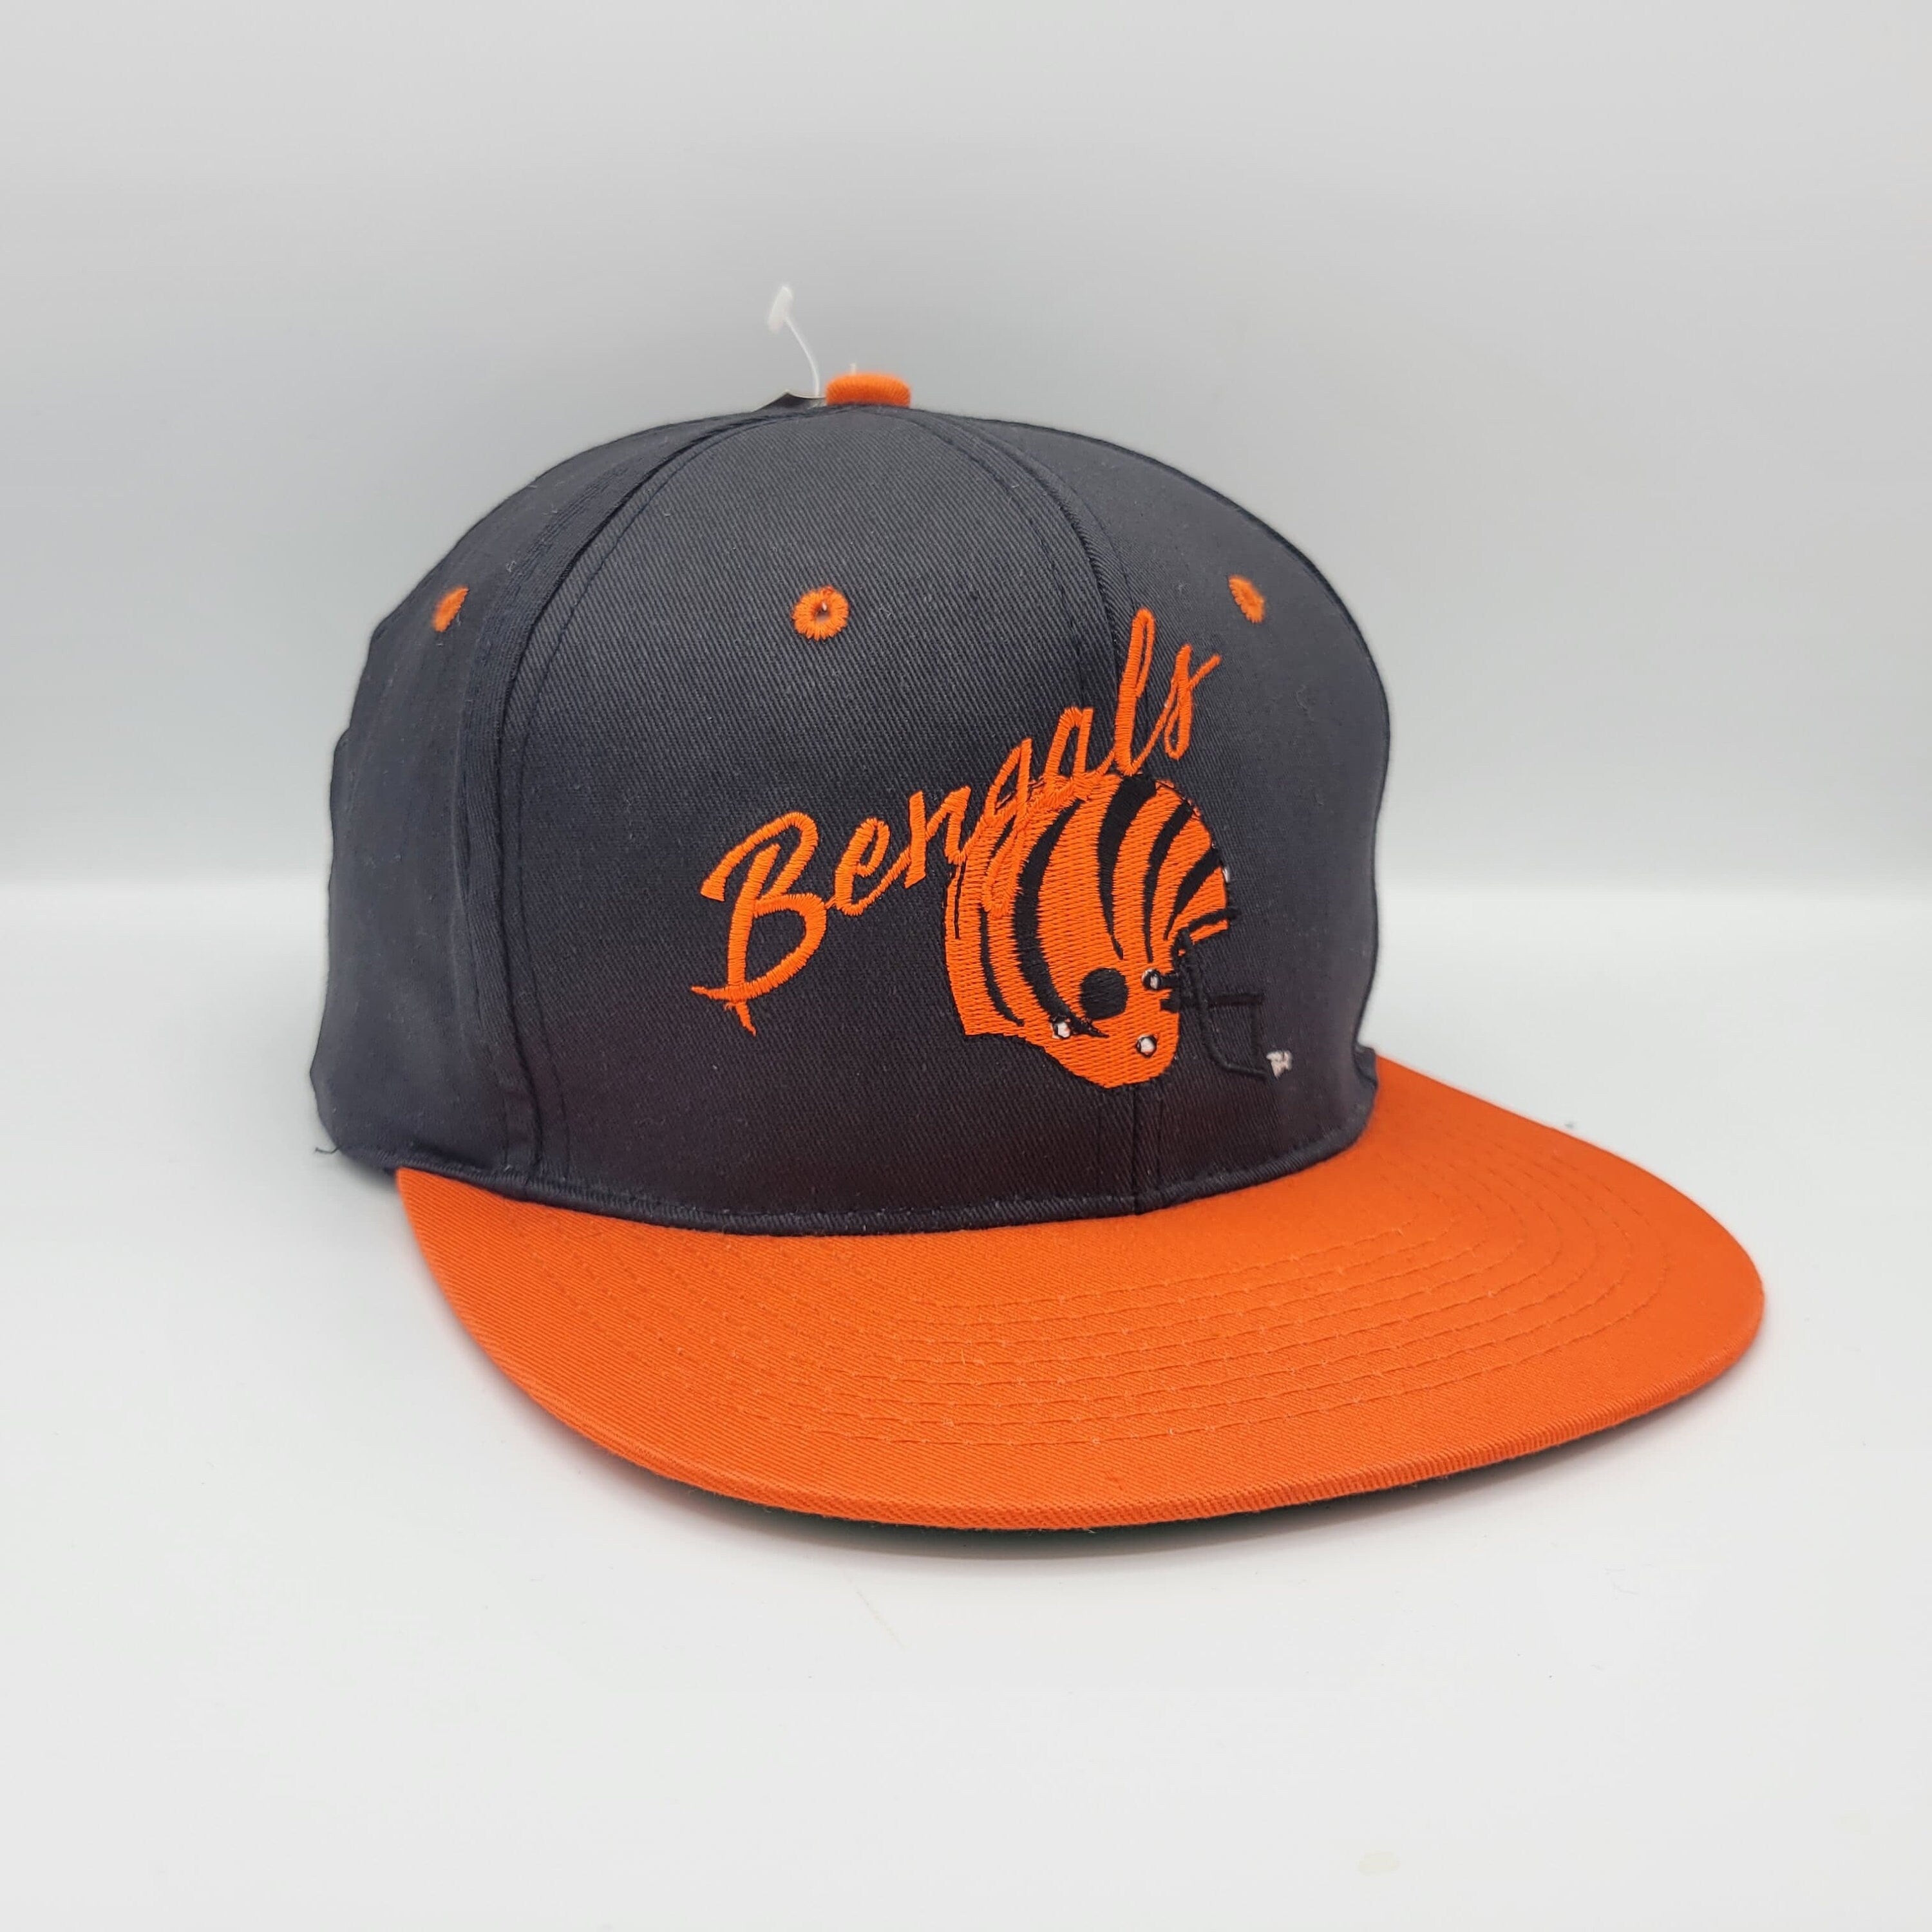 Cincinnati Bengals Vintage 90s Ajd Snapback Hat Nfl Football Black Ora